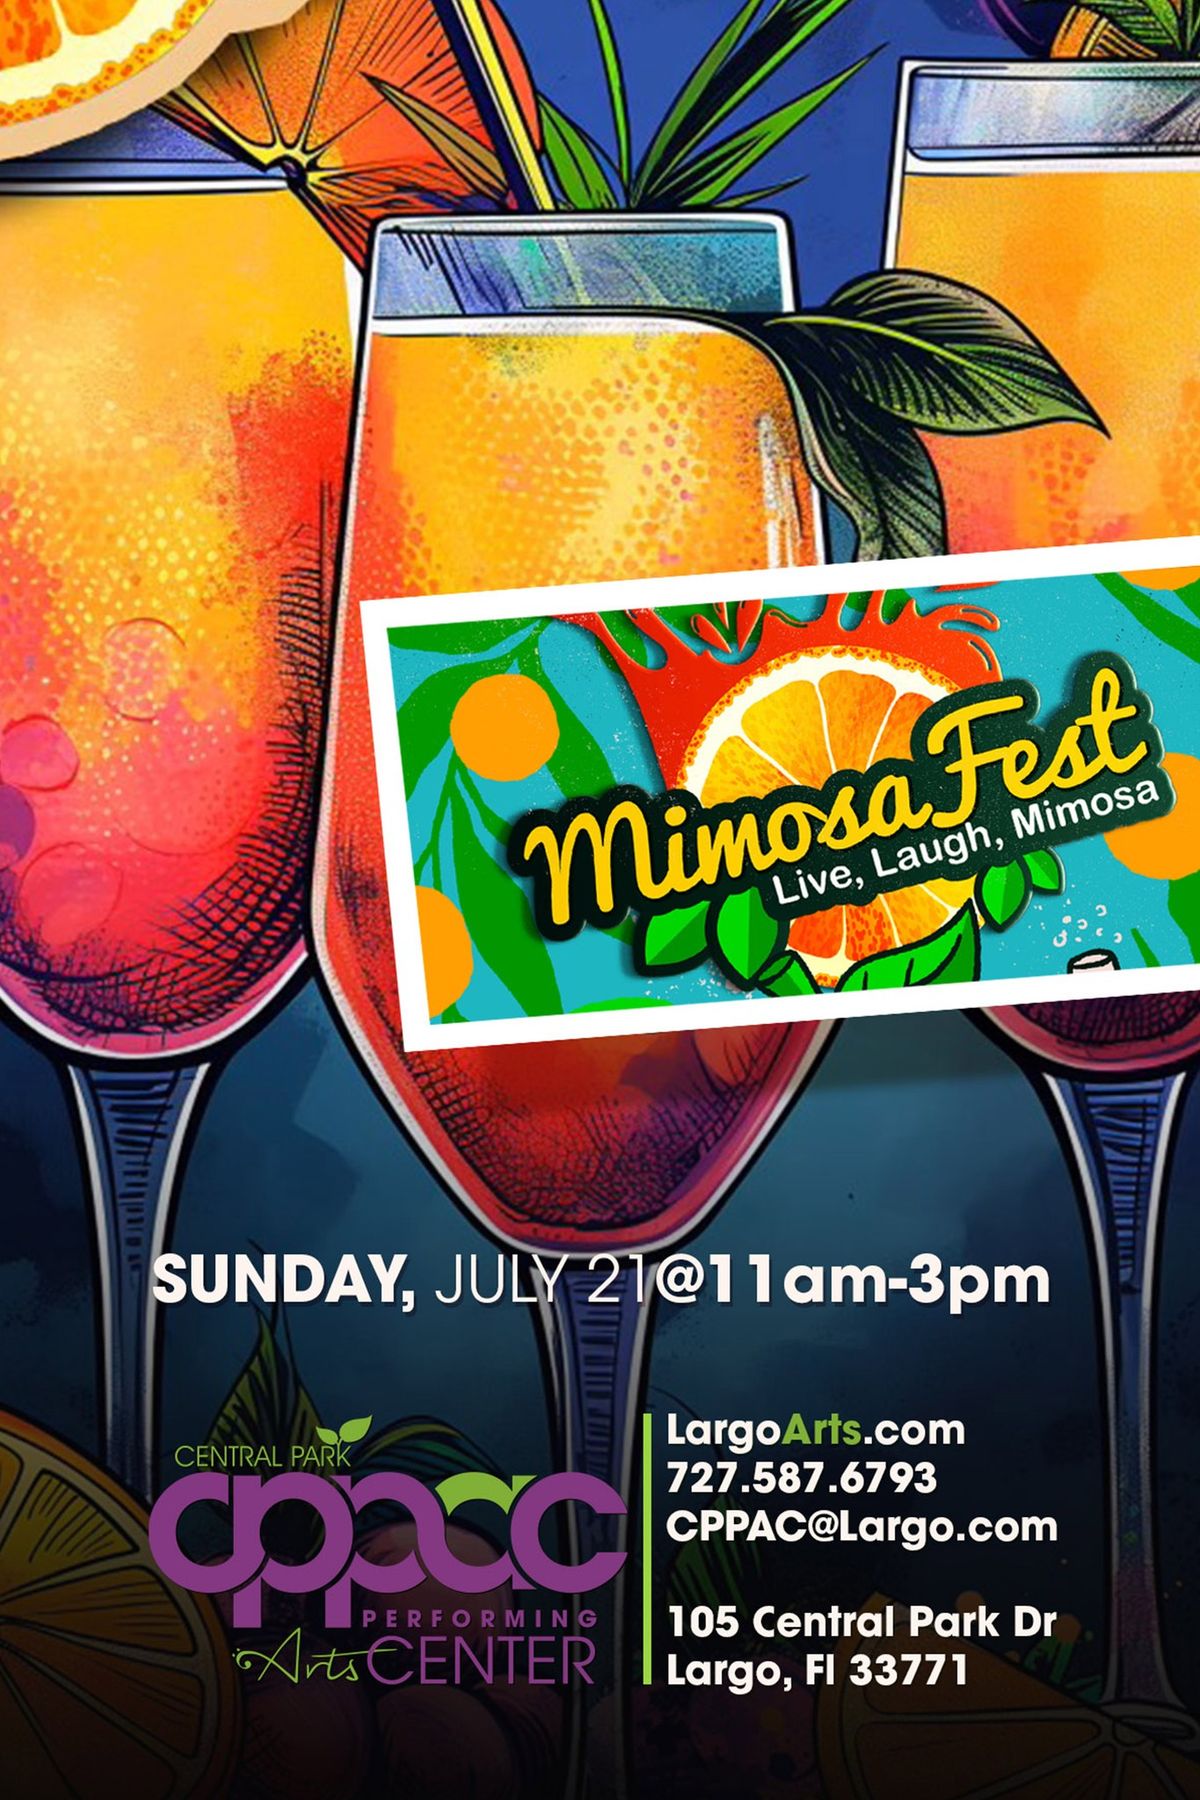 Mimosa Festival